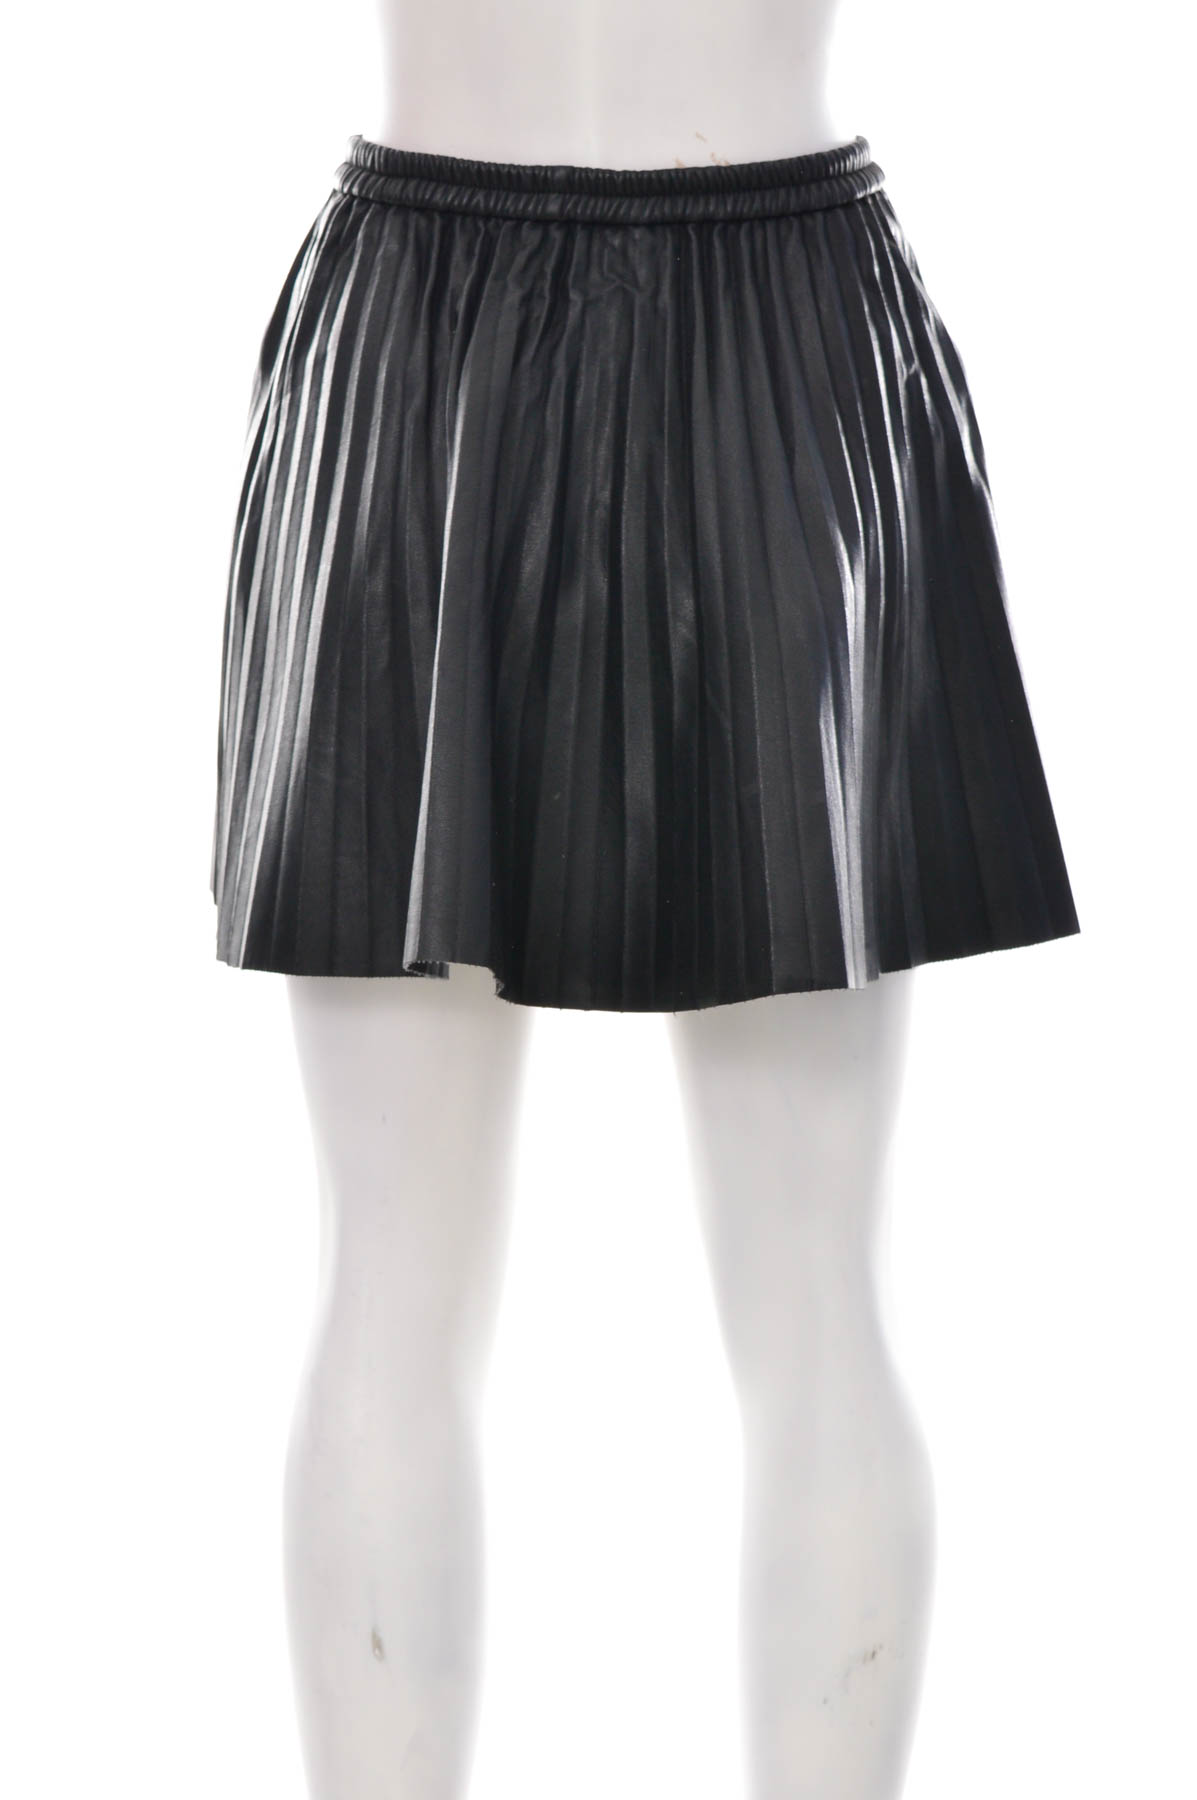 Leather skirt - Groggy by jbc - 1